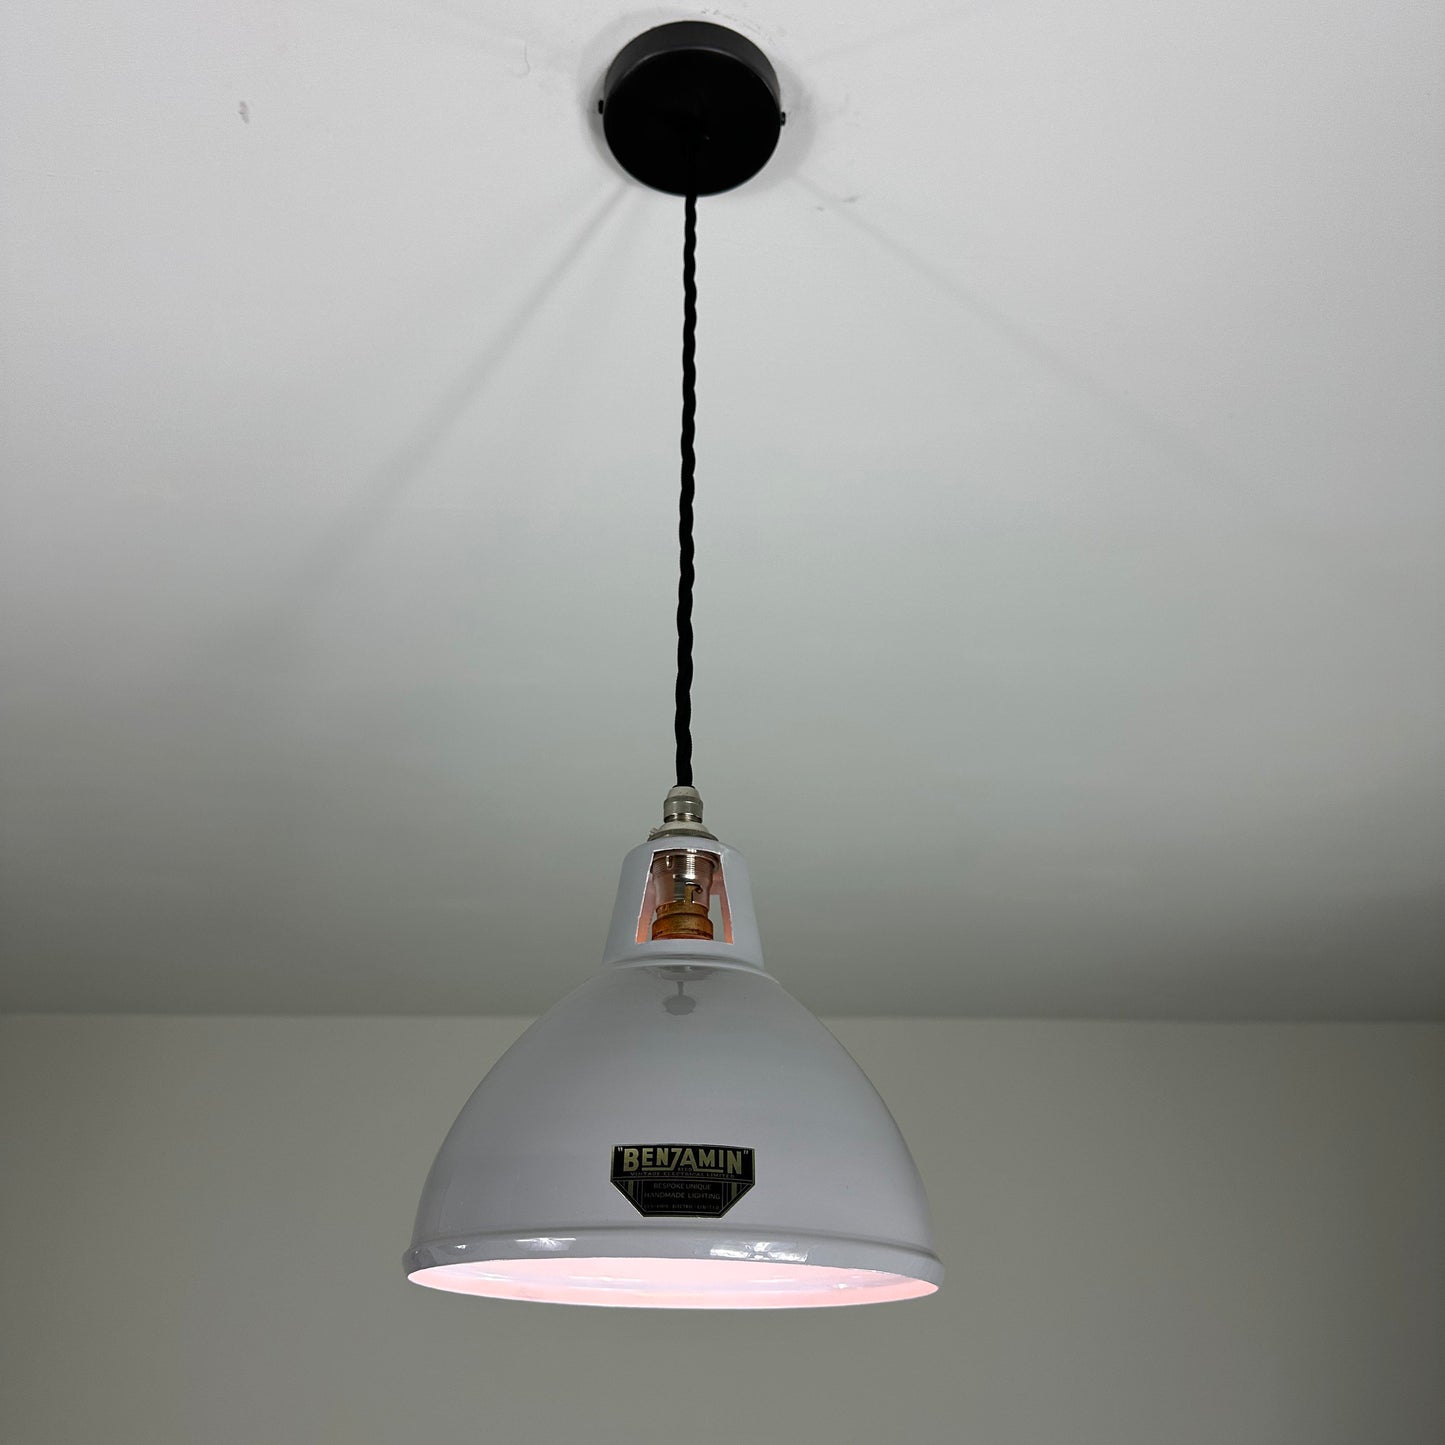 Shropham ~ Small Original Grey Solid Shade Design Pendant Set Light | Ceiling Dining Room | Kitchen Table | Vintage Industrial | 8 Inch